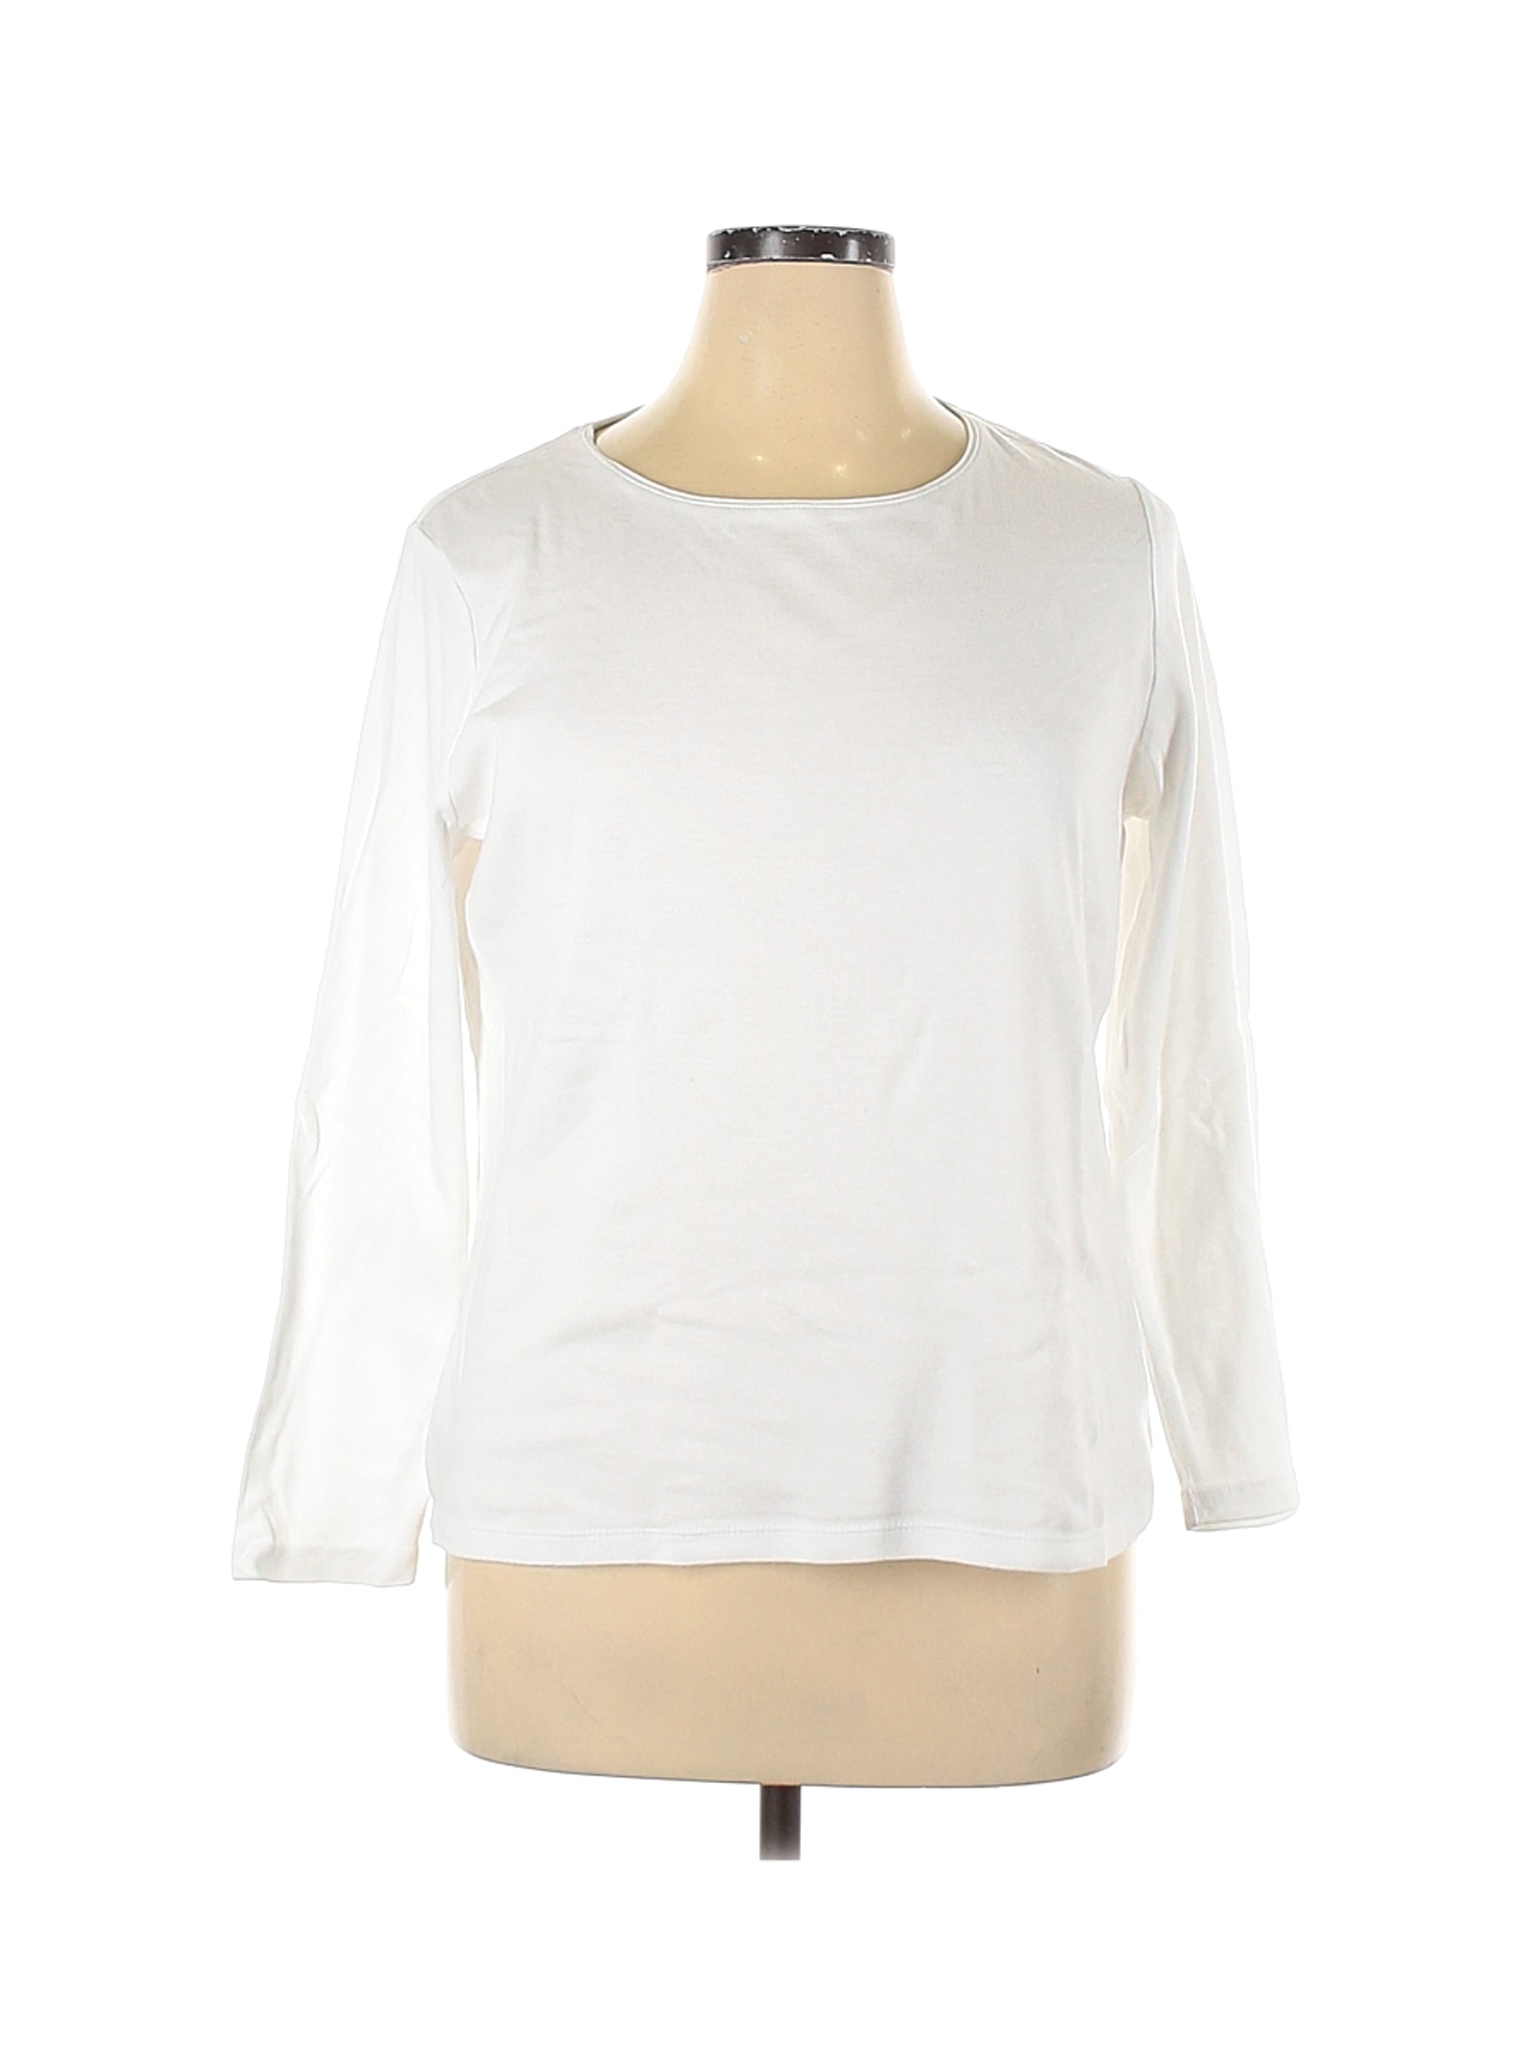 Talbots Women White Long Sleeve T-Shirt 1X Plus | eBay